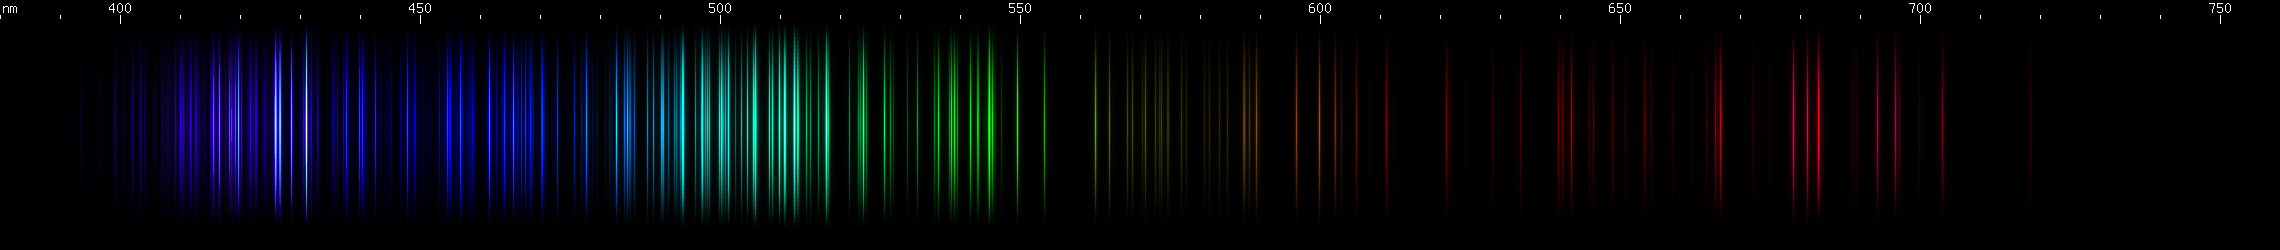 Spectral lines of Iridium.